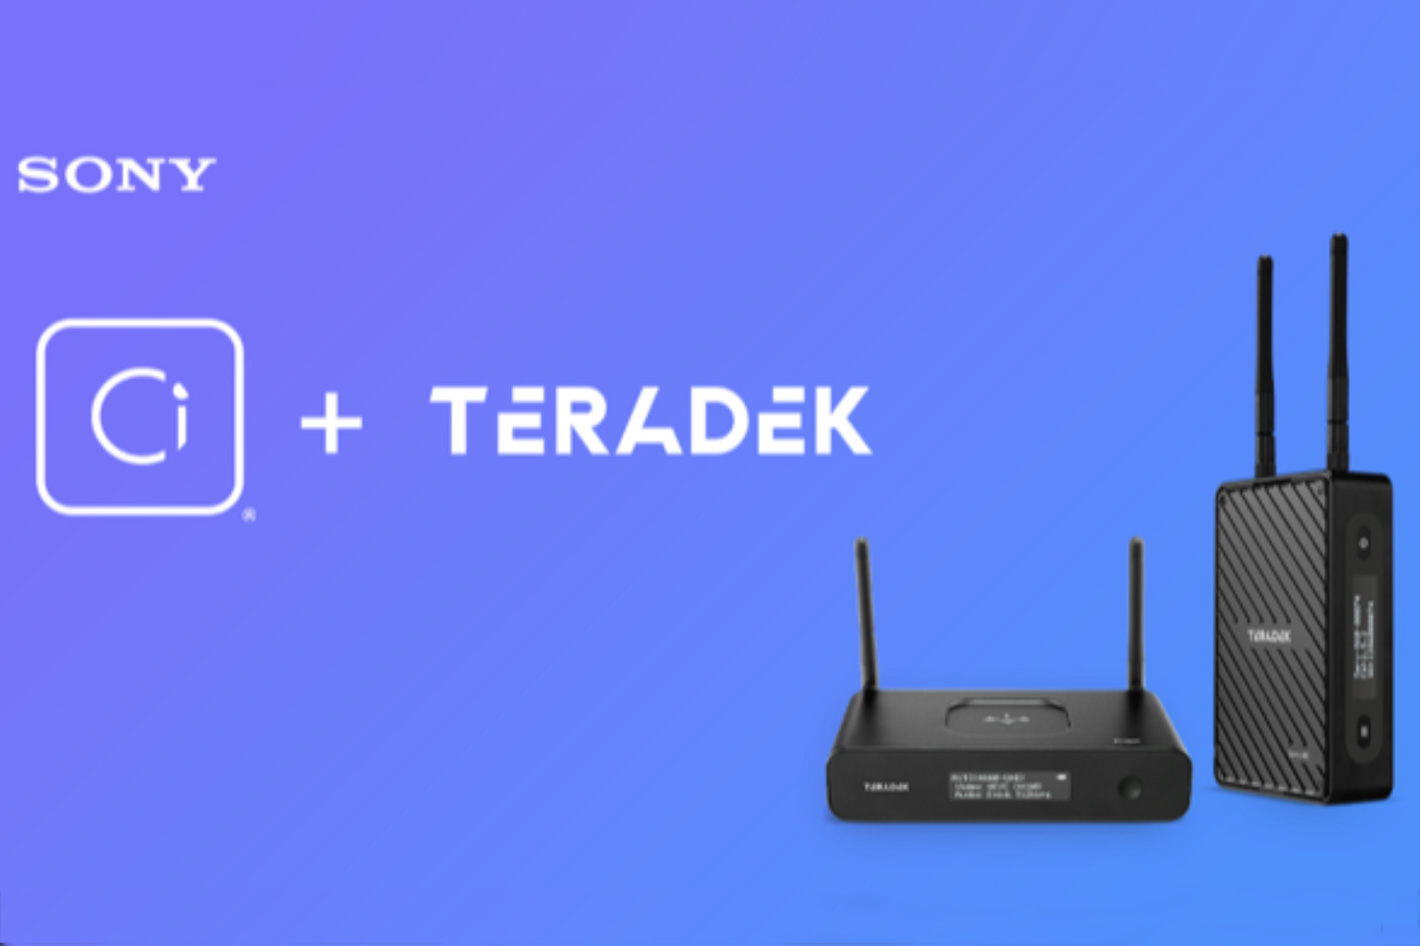 Sony’s Ci Media Cloud natively integrates Teradek solutions